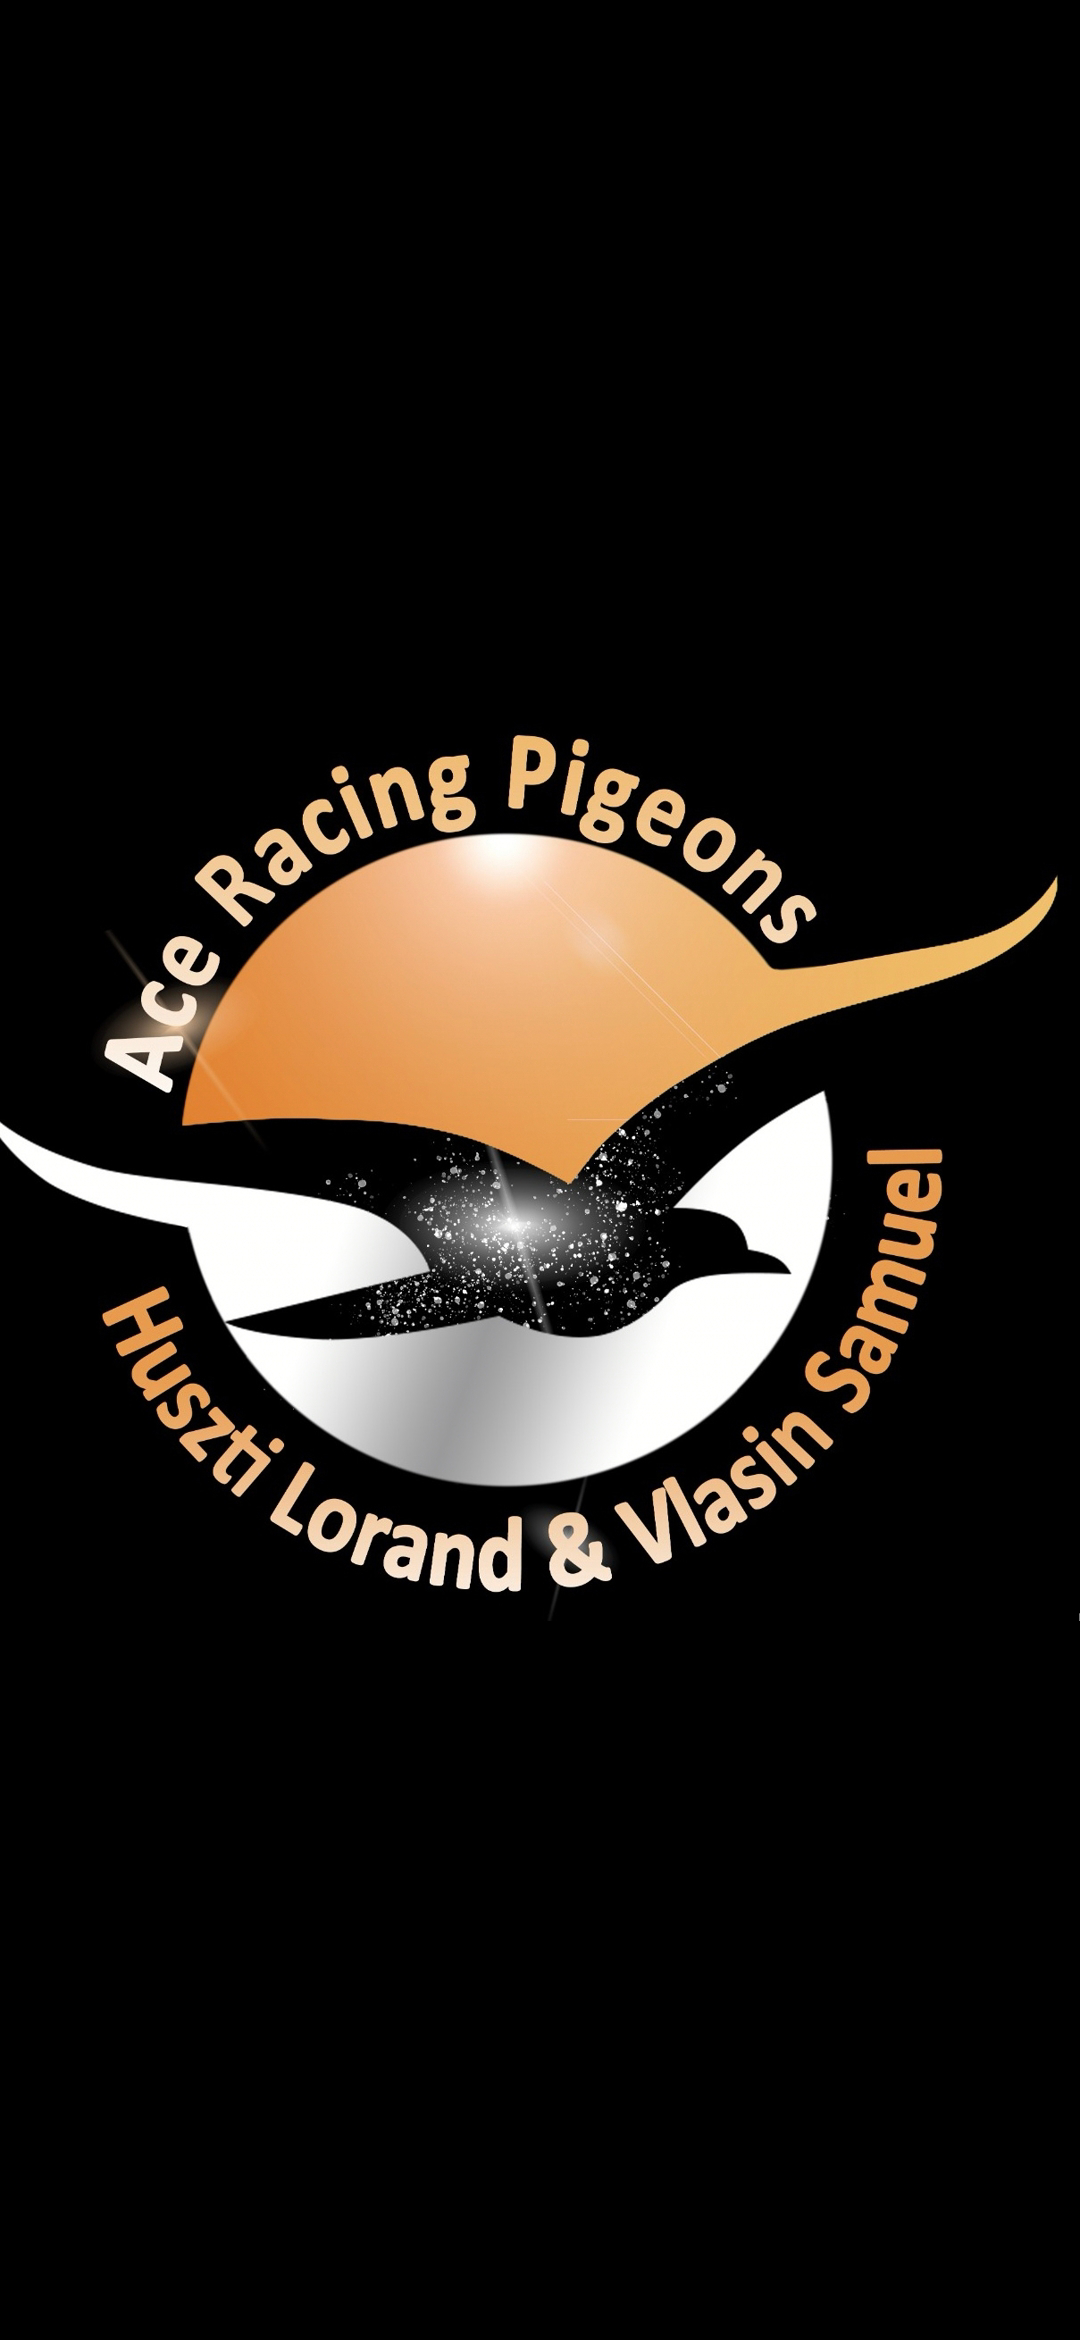 Image_{Ace Racing Pigeons 